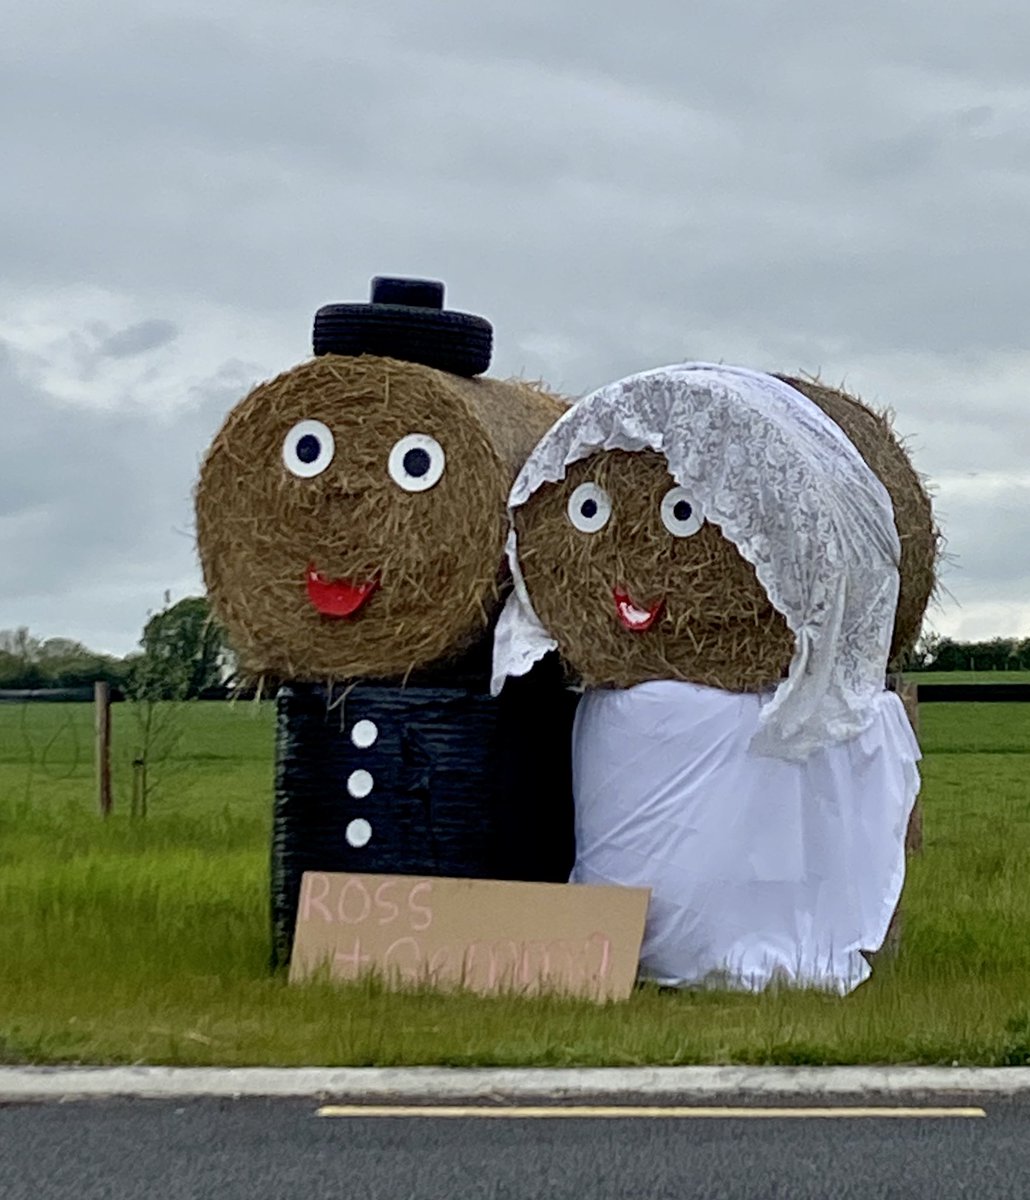 Big Day meets Big Hay - congratulations, Ross & Gemma... whoever you are!🤵👰🥂#spottedinwestmeath #irishwedding #countrylife